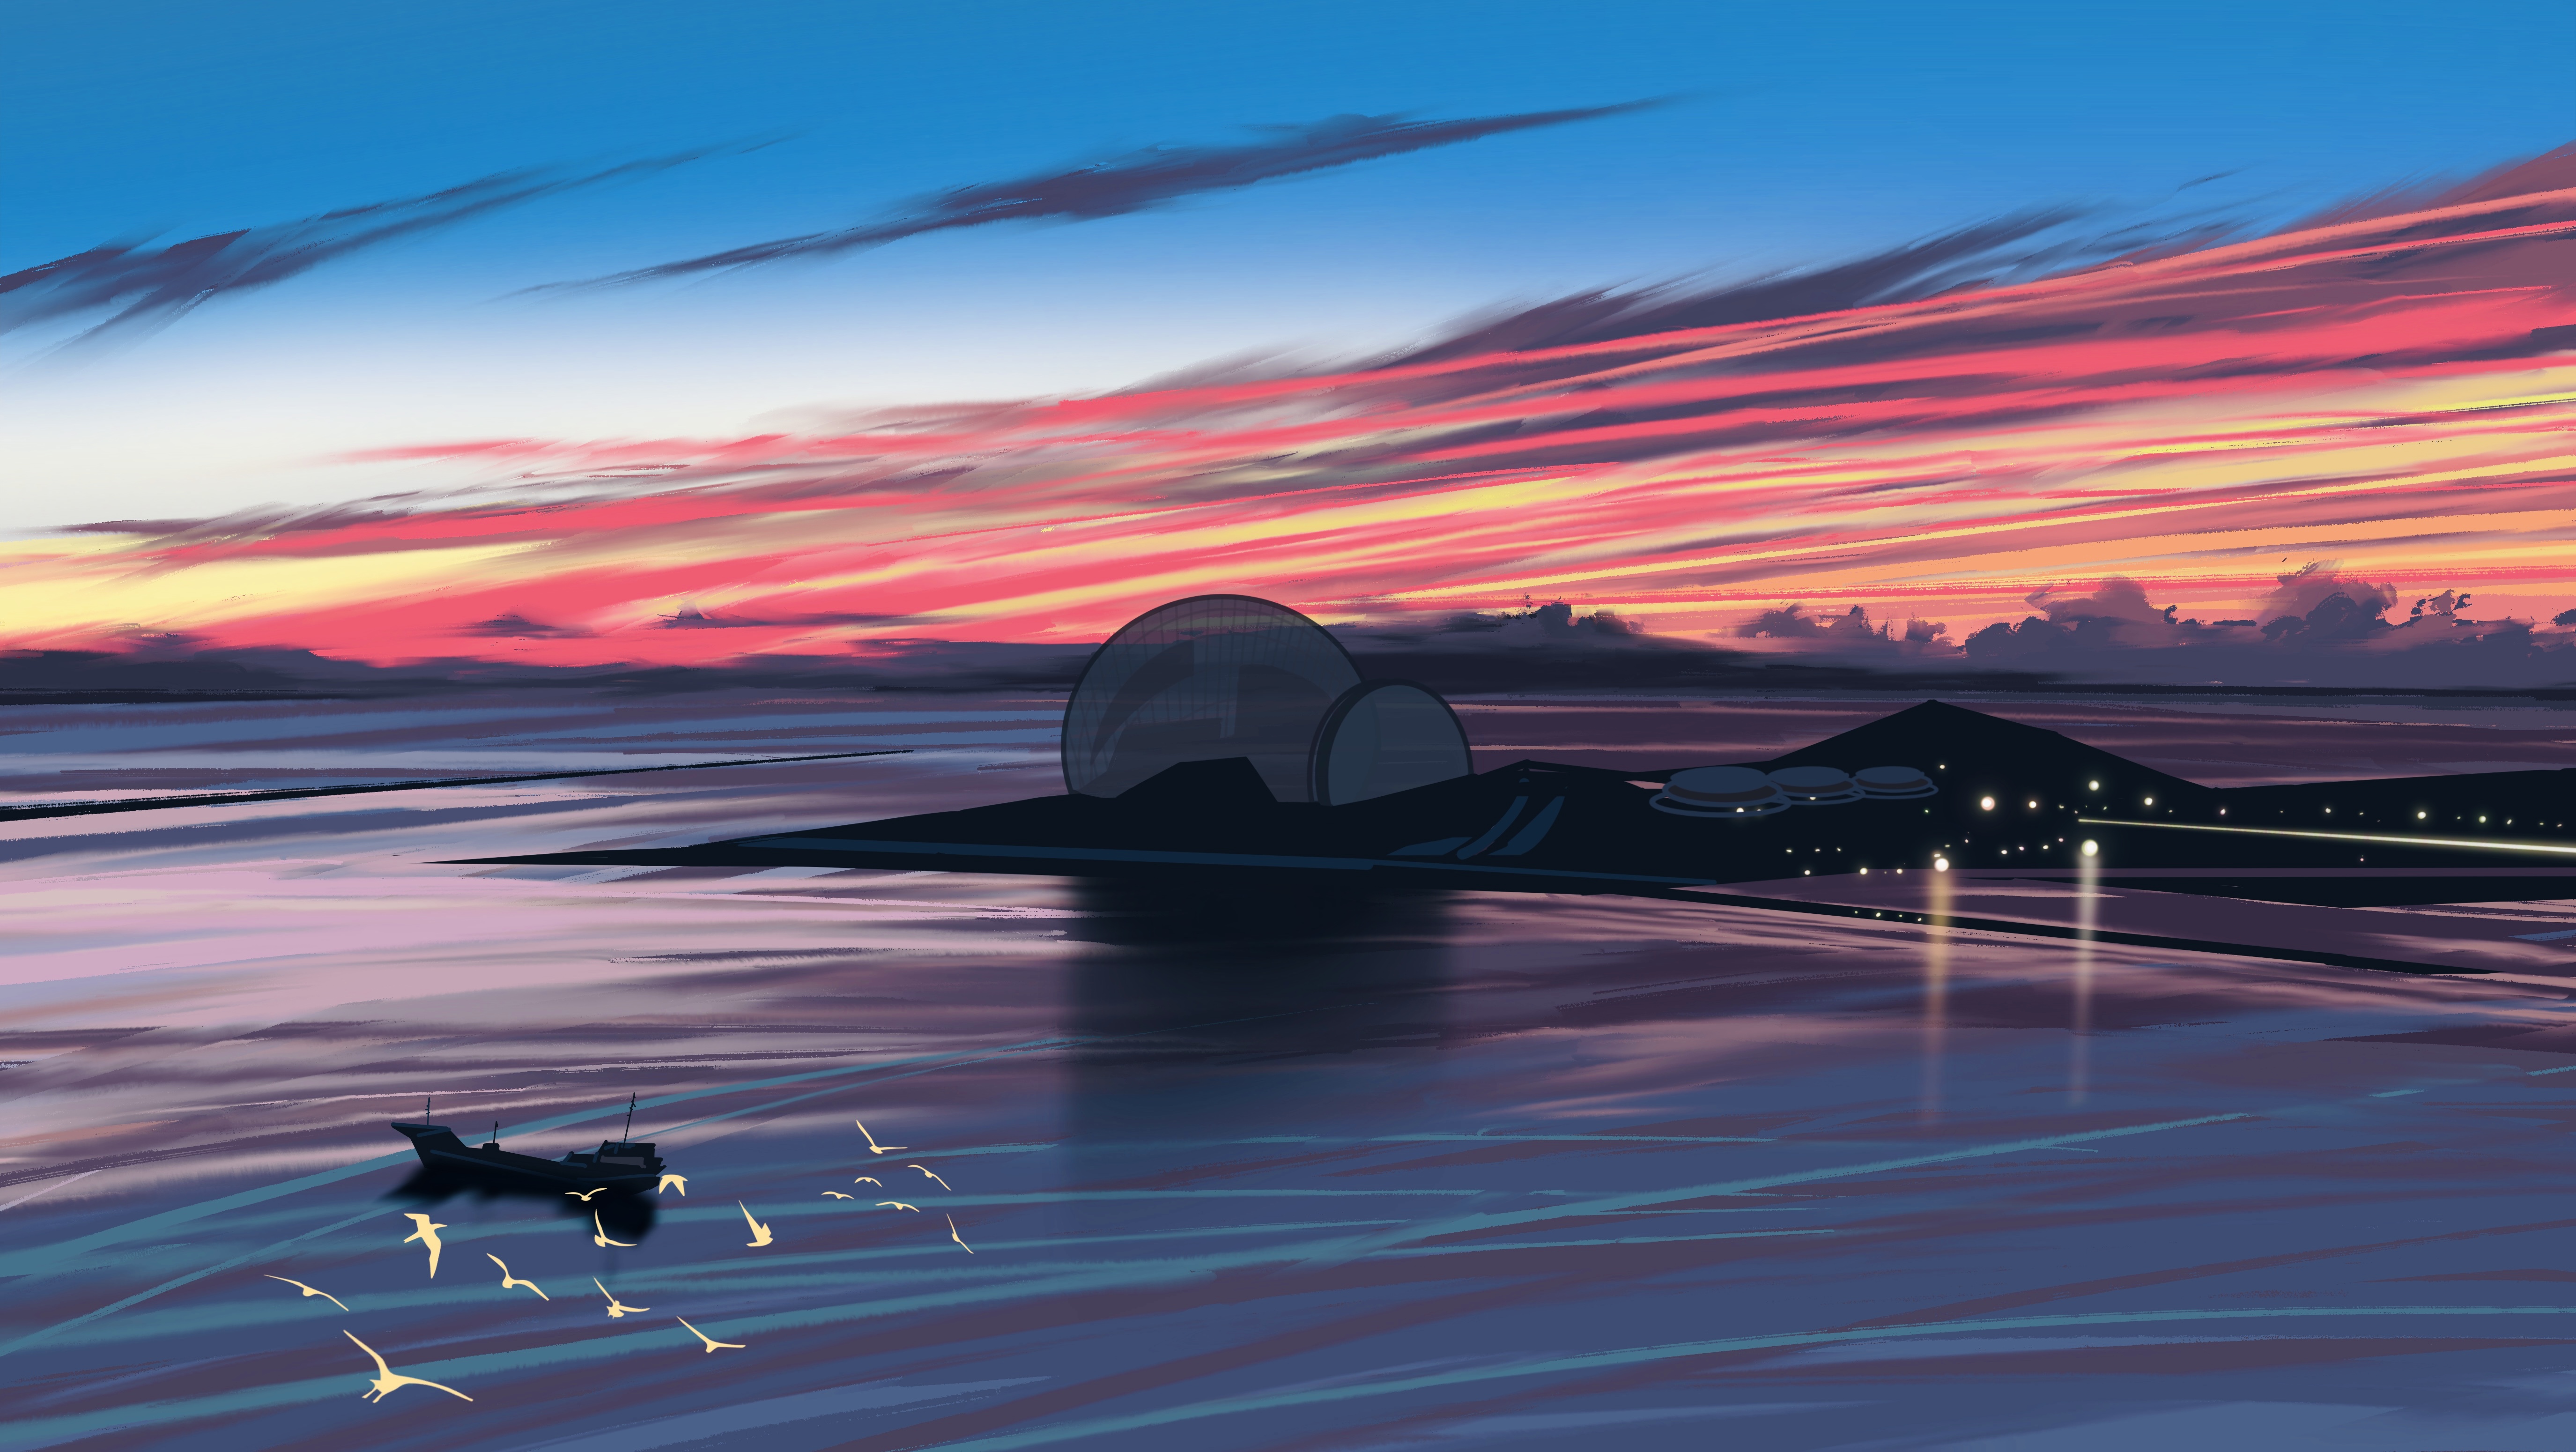 Digital Art Landscape Sea Sky Sunset Ship Fangpeii 5500x3100